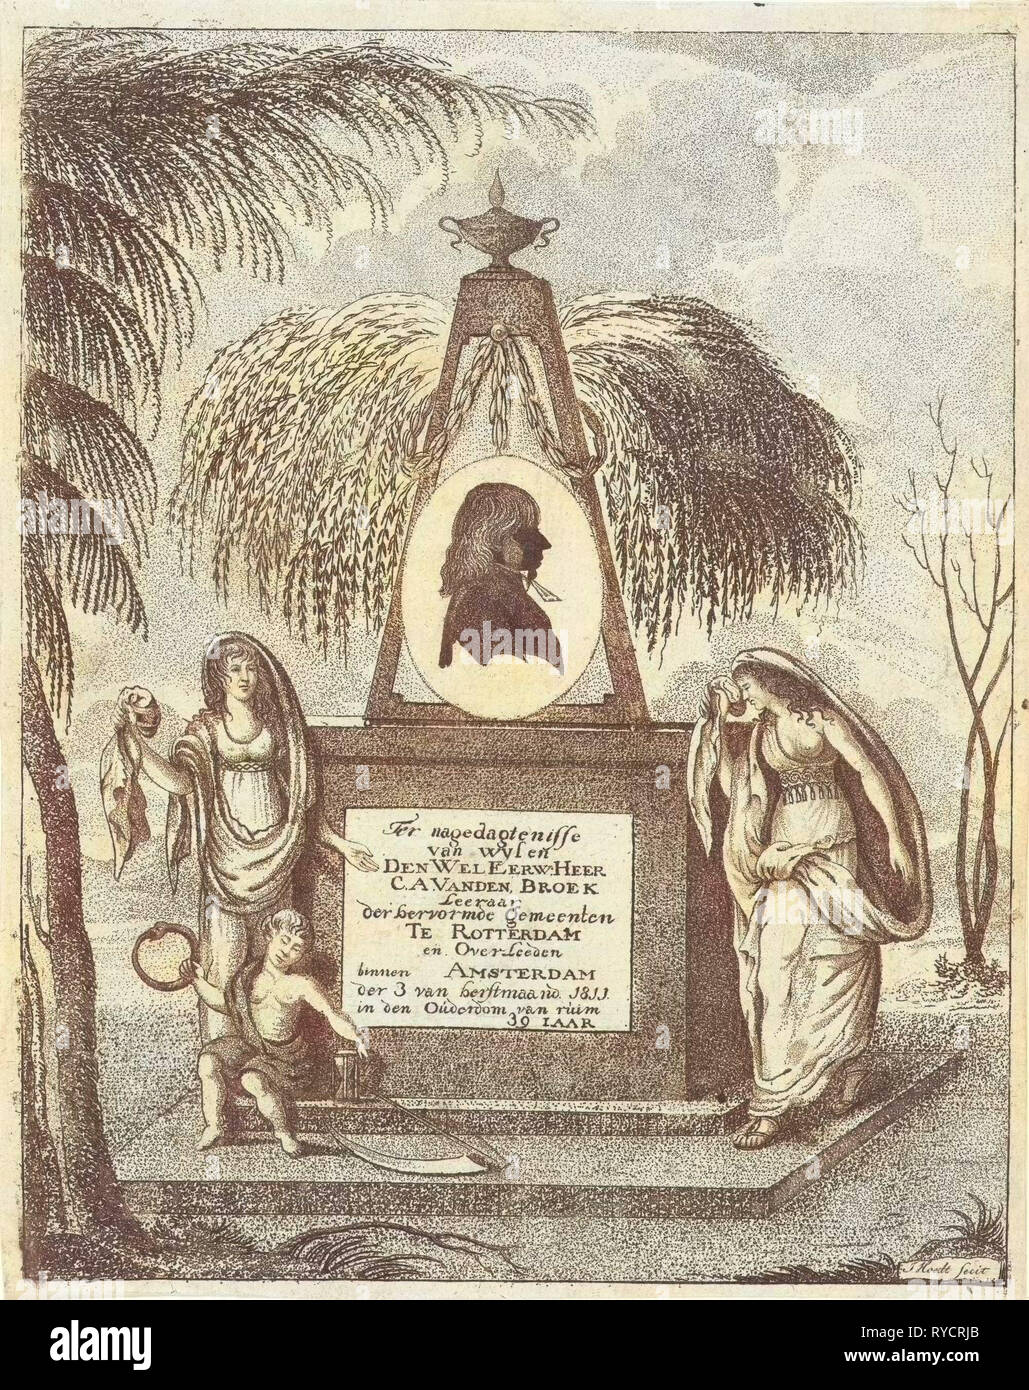 Portrait of C.A. Vanden Broeck on a tomb, Jacob Hugo Hoedt, 1811 - 1813 Stock Photo